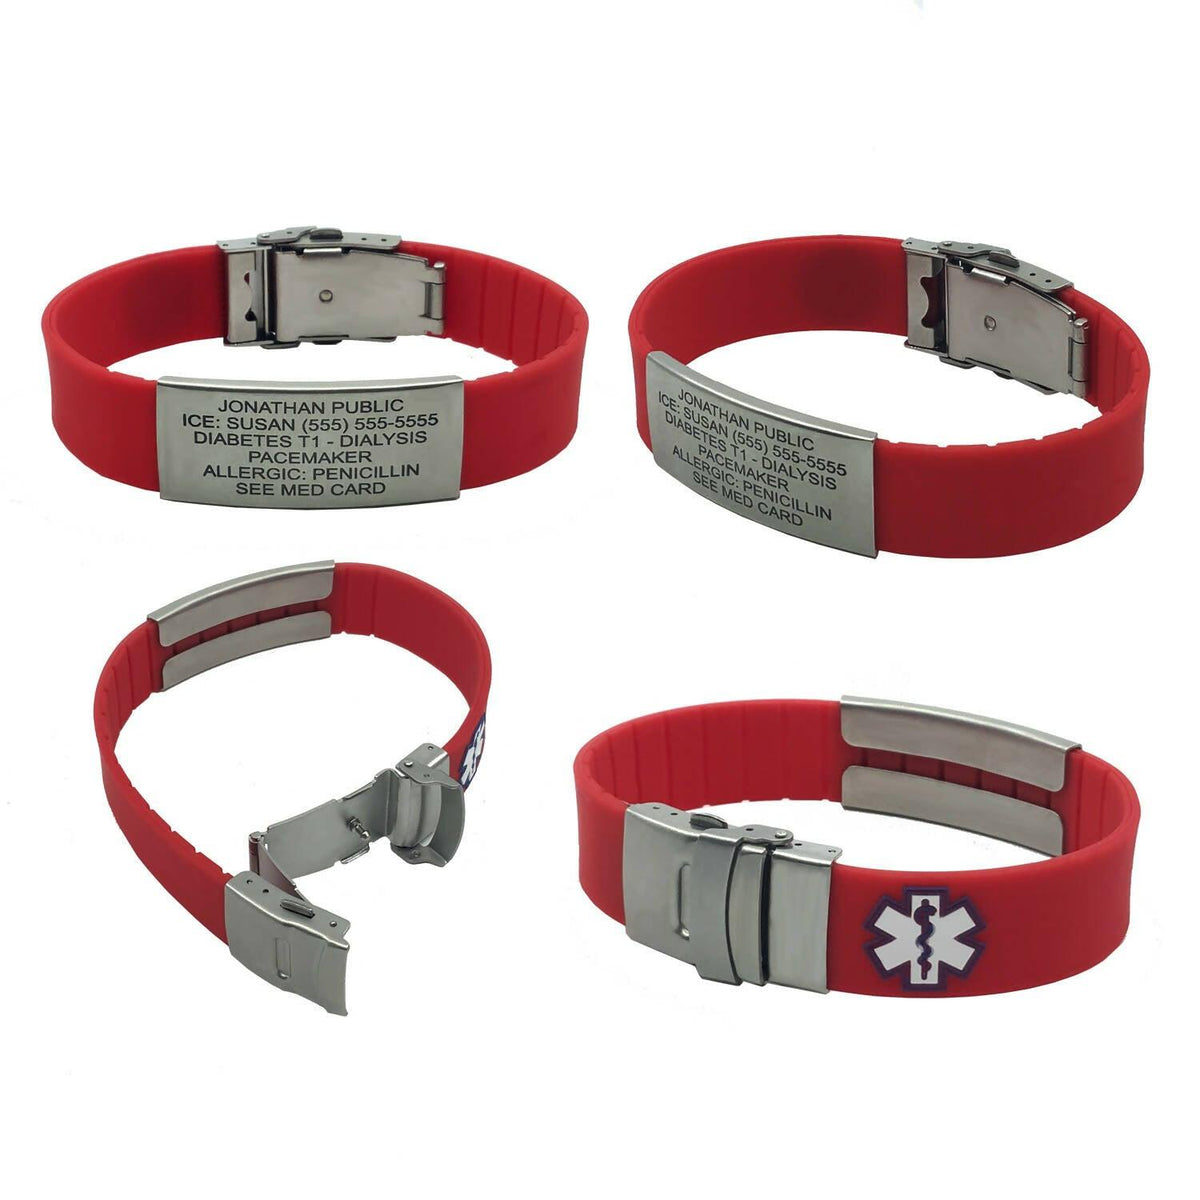 Medical Alert Bracelets, Diabetes Accessories, Medical Id Bracelet